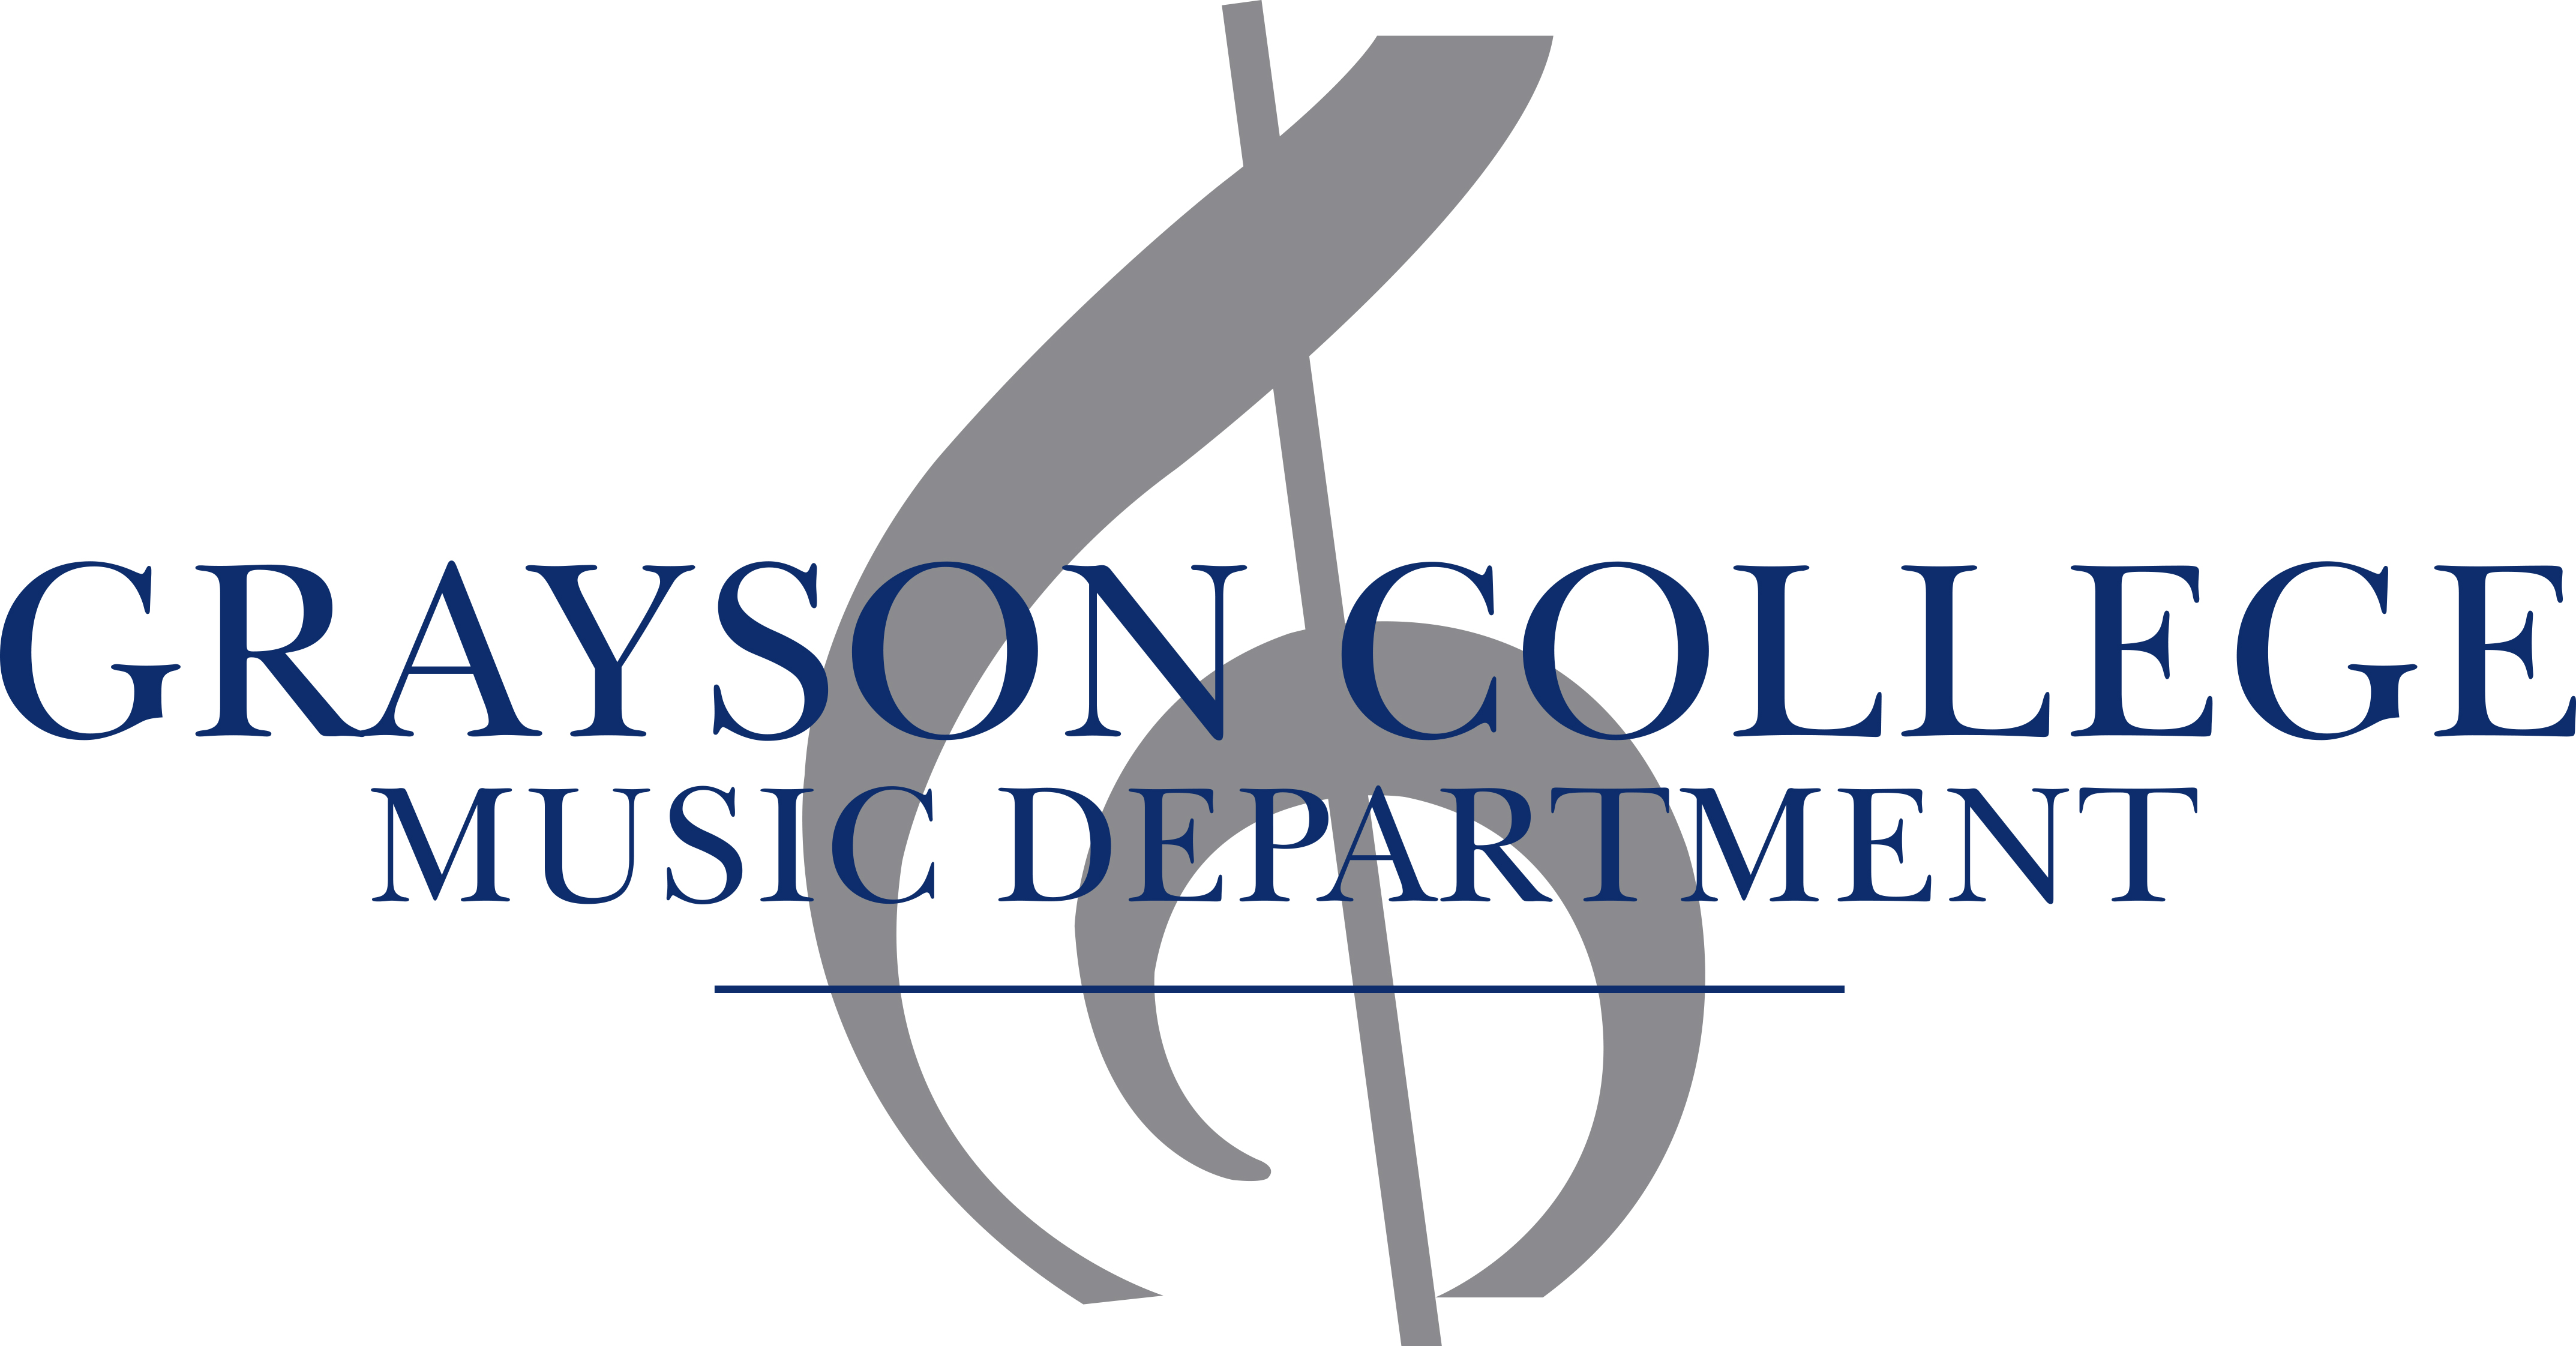 Grayson College Music Department